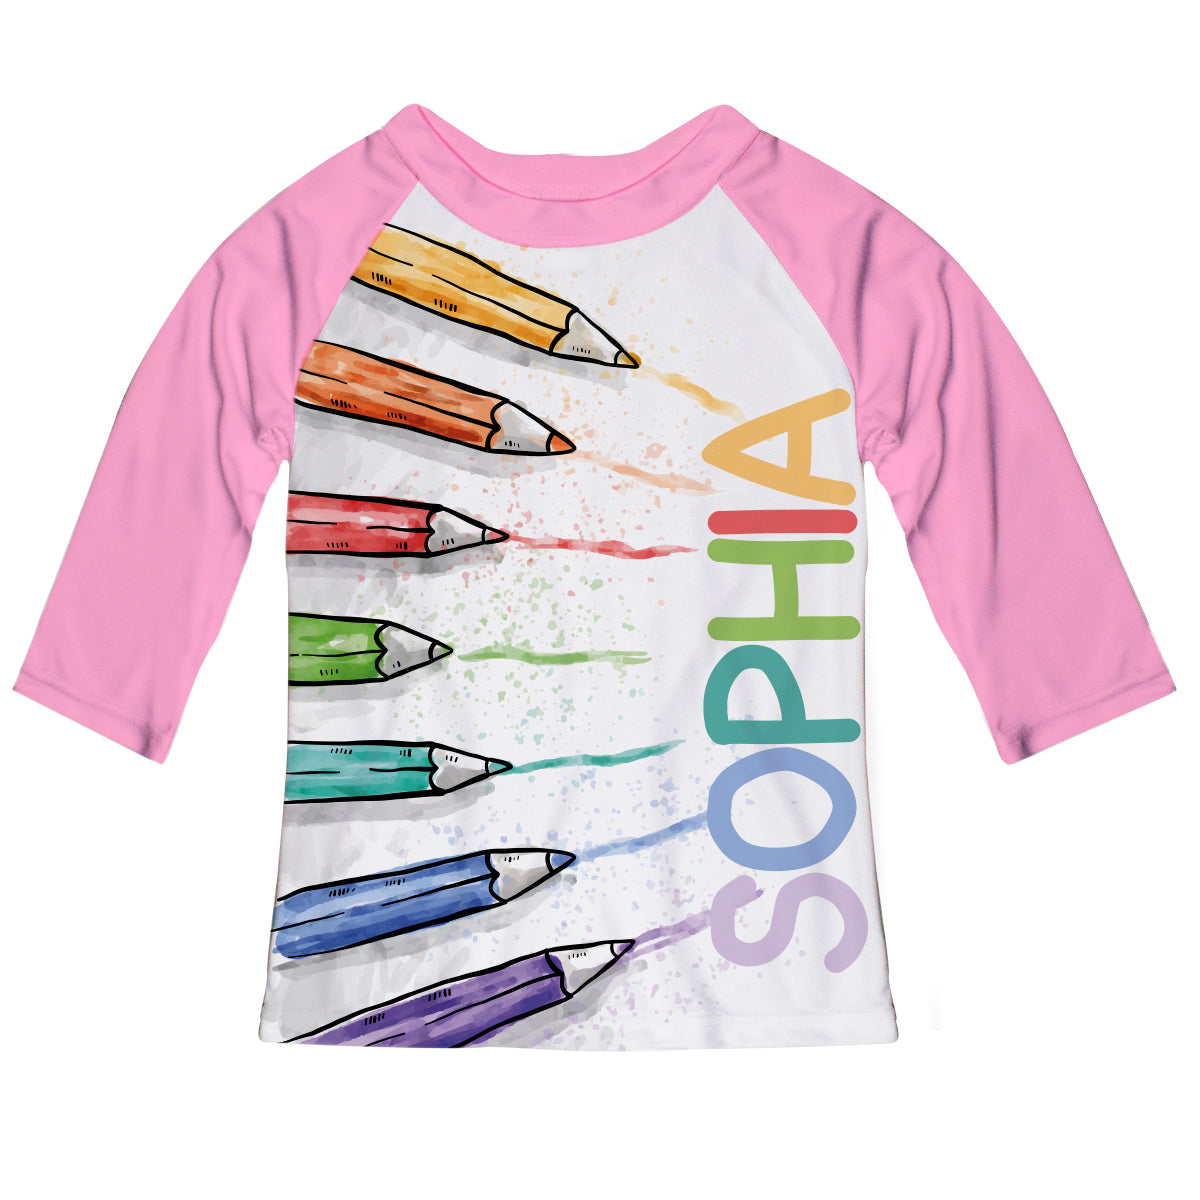 Colored Pencils Name White and Pink Raglan Tee Shirt 3/4 Sleeve